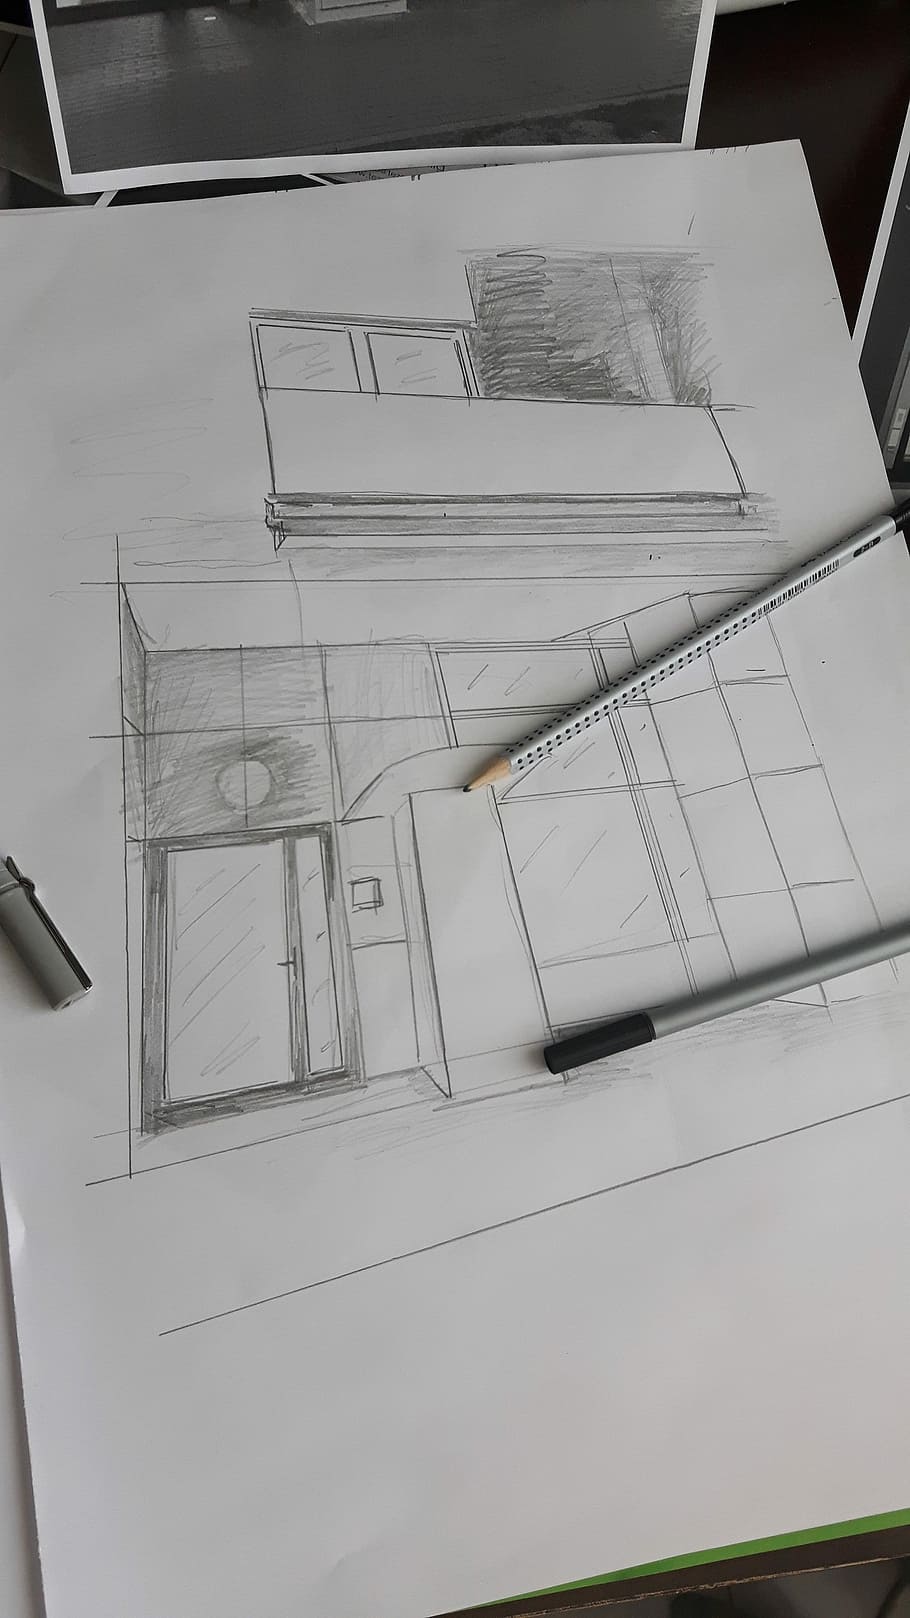 Figure, Sketch, Pencil, ołóweczek, architecture, blueprint, design, planning, design professional, indoors